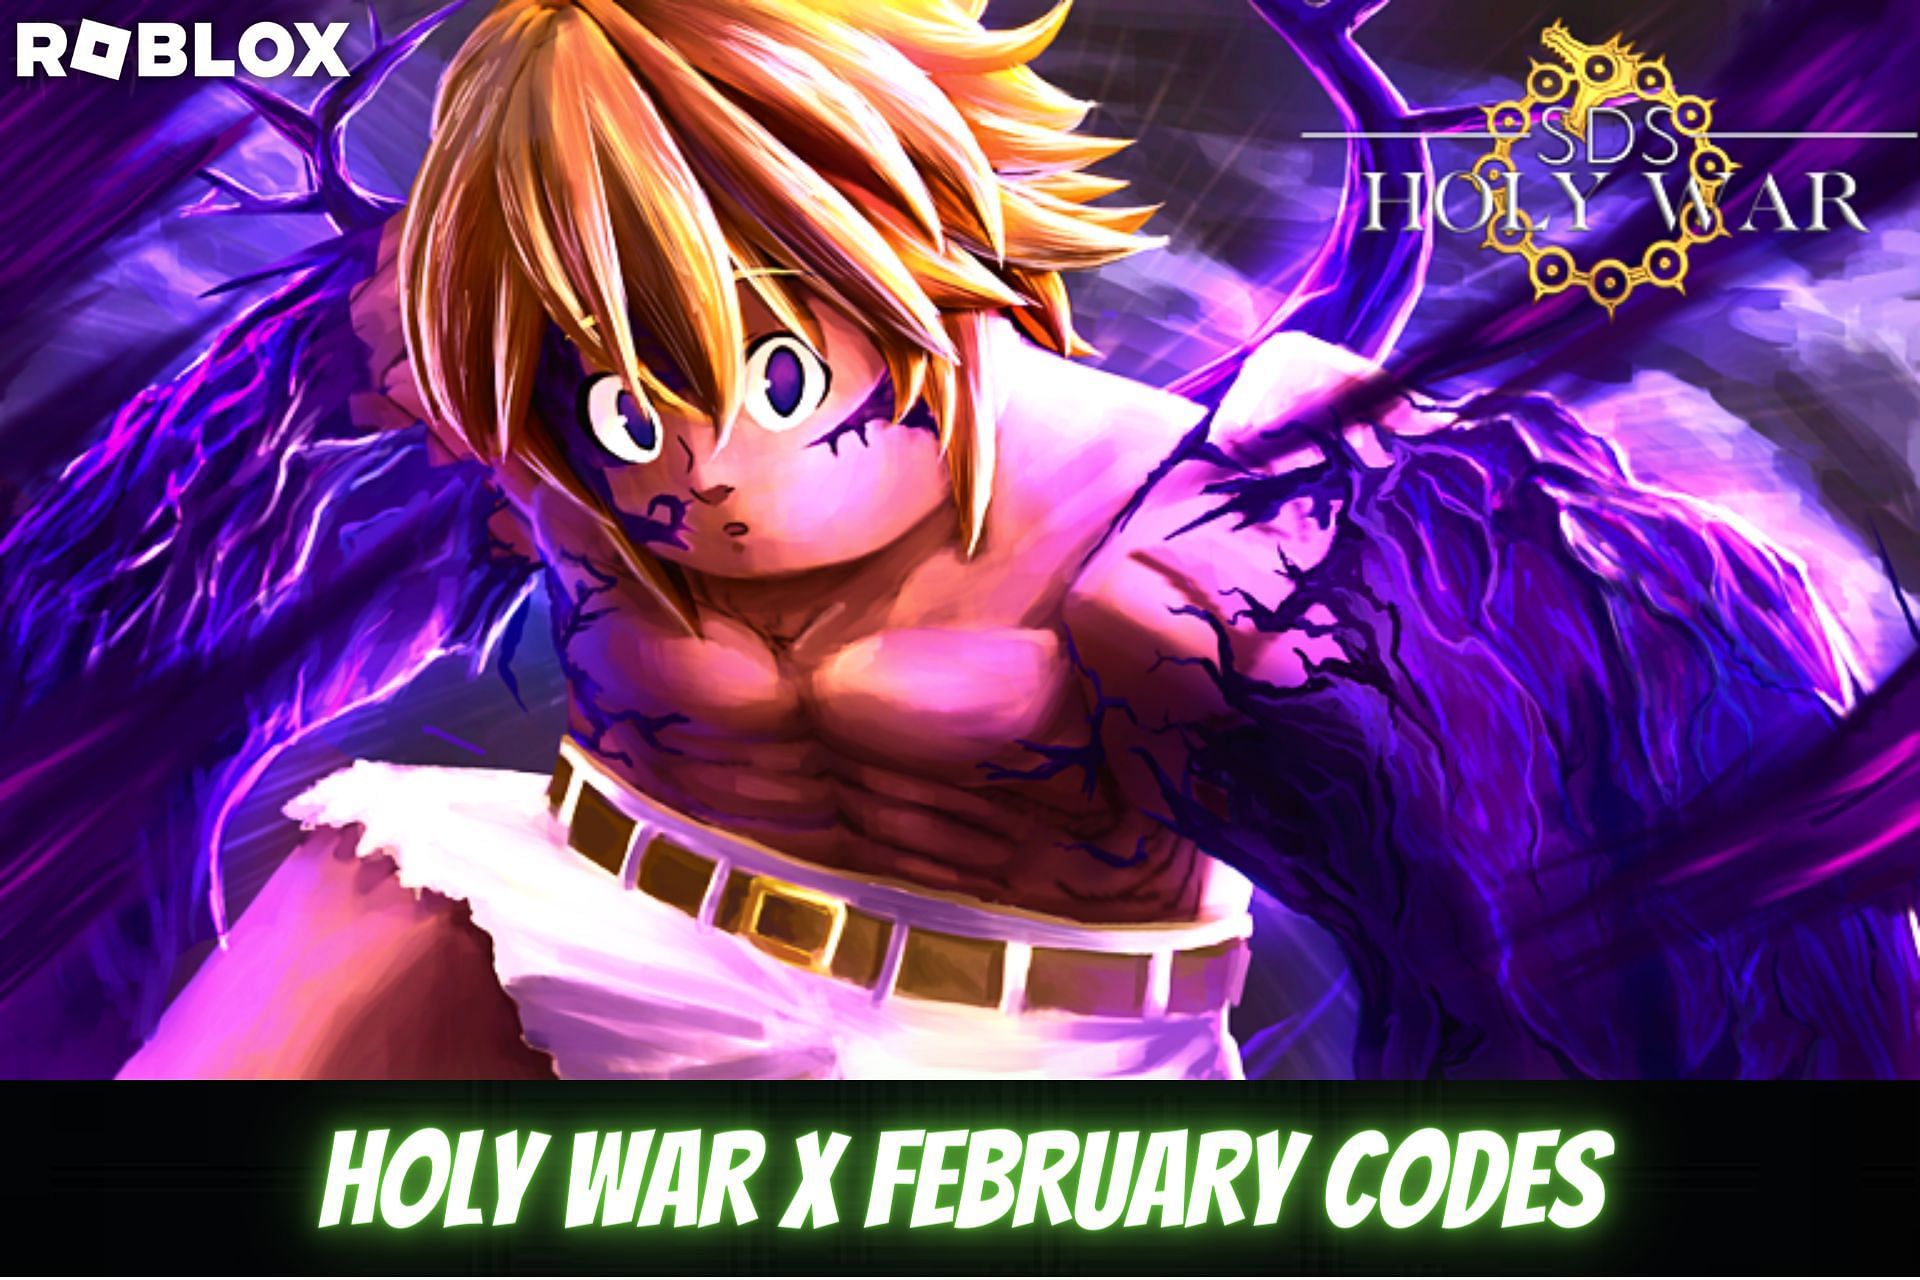 Holy War X February codes